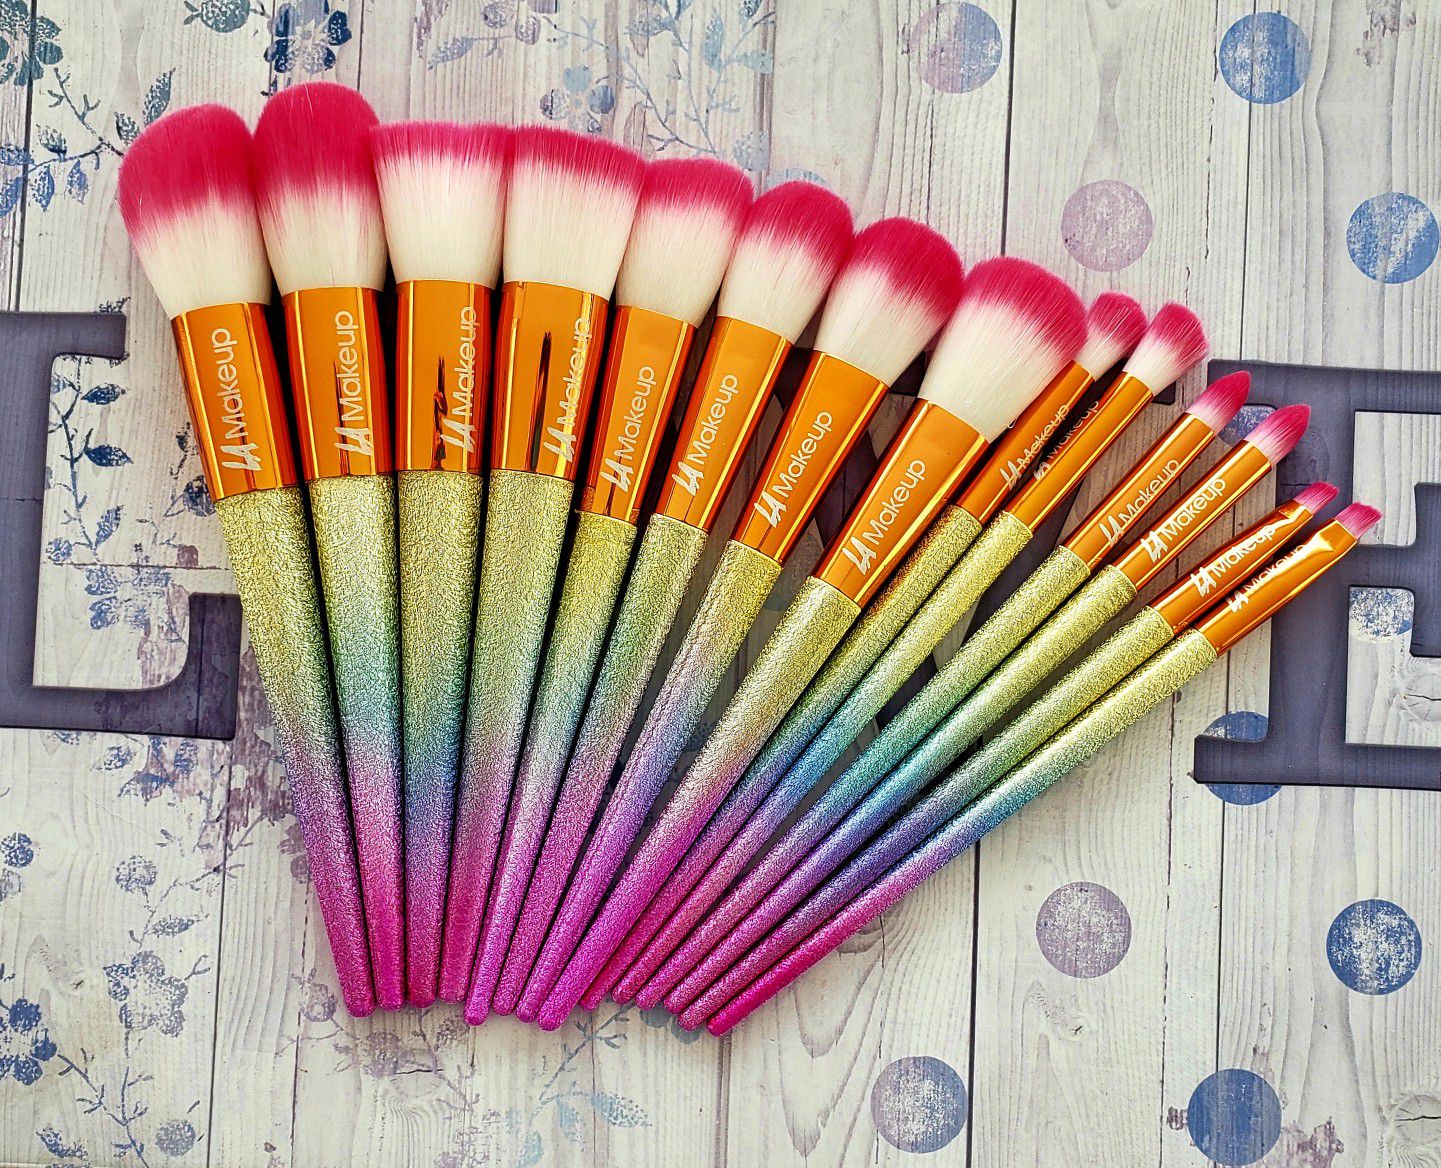 14pcs colorful makeup brushes